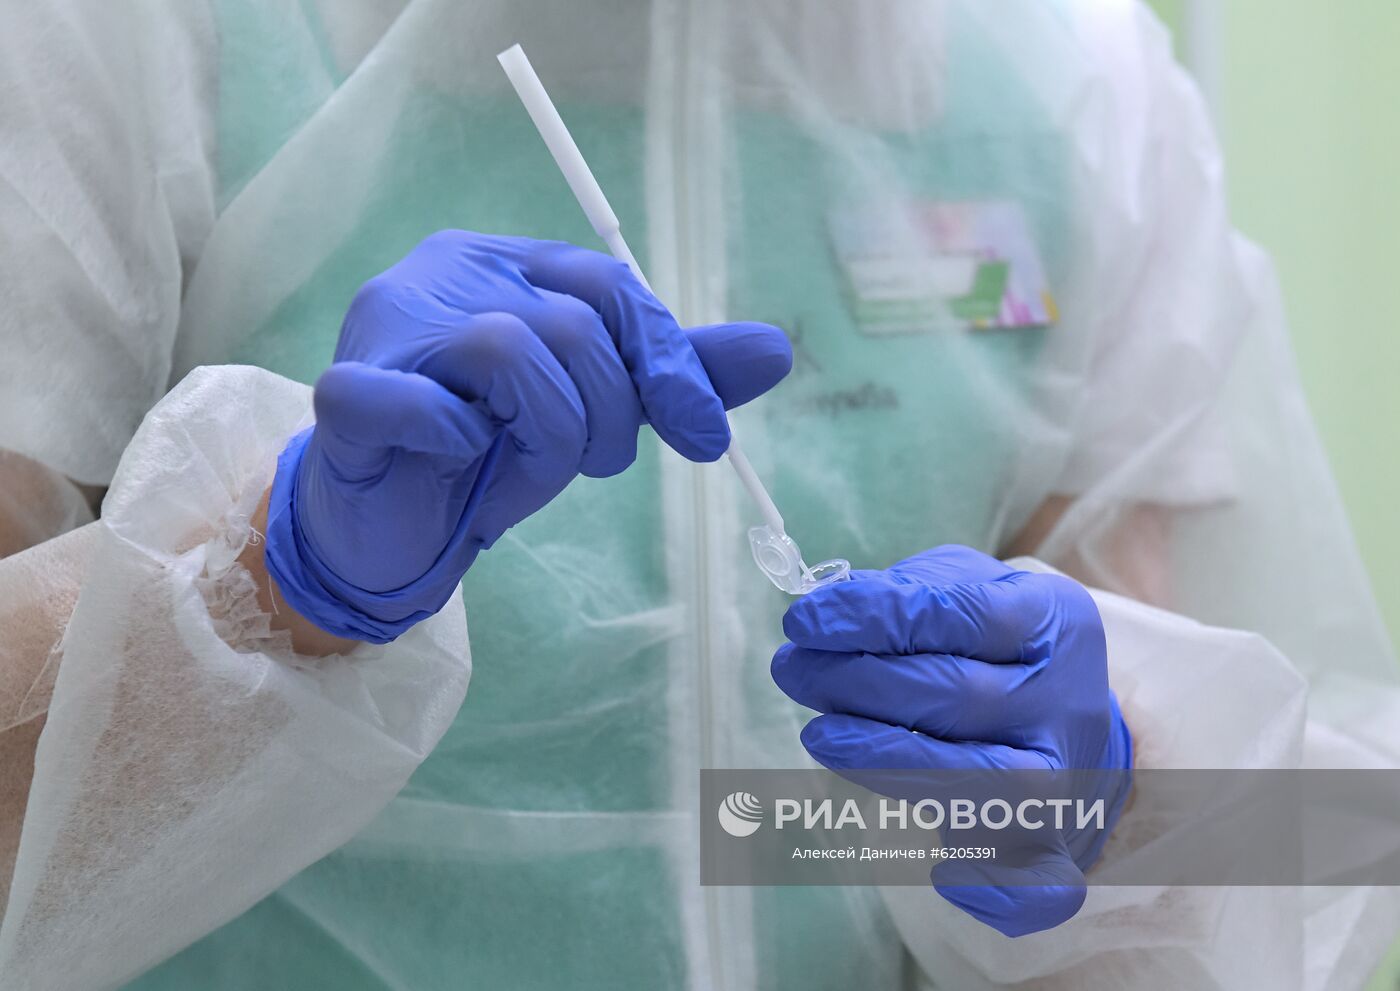 Центр тестирования на коронавирус в Санкт-Петербурге